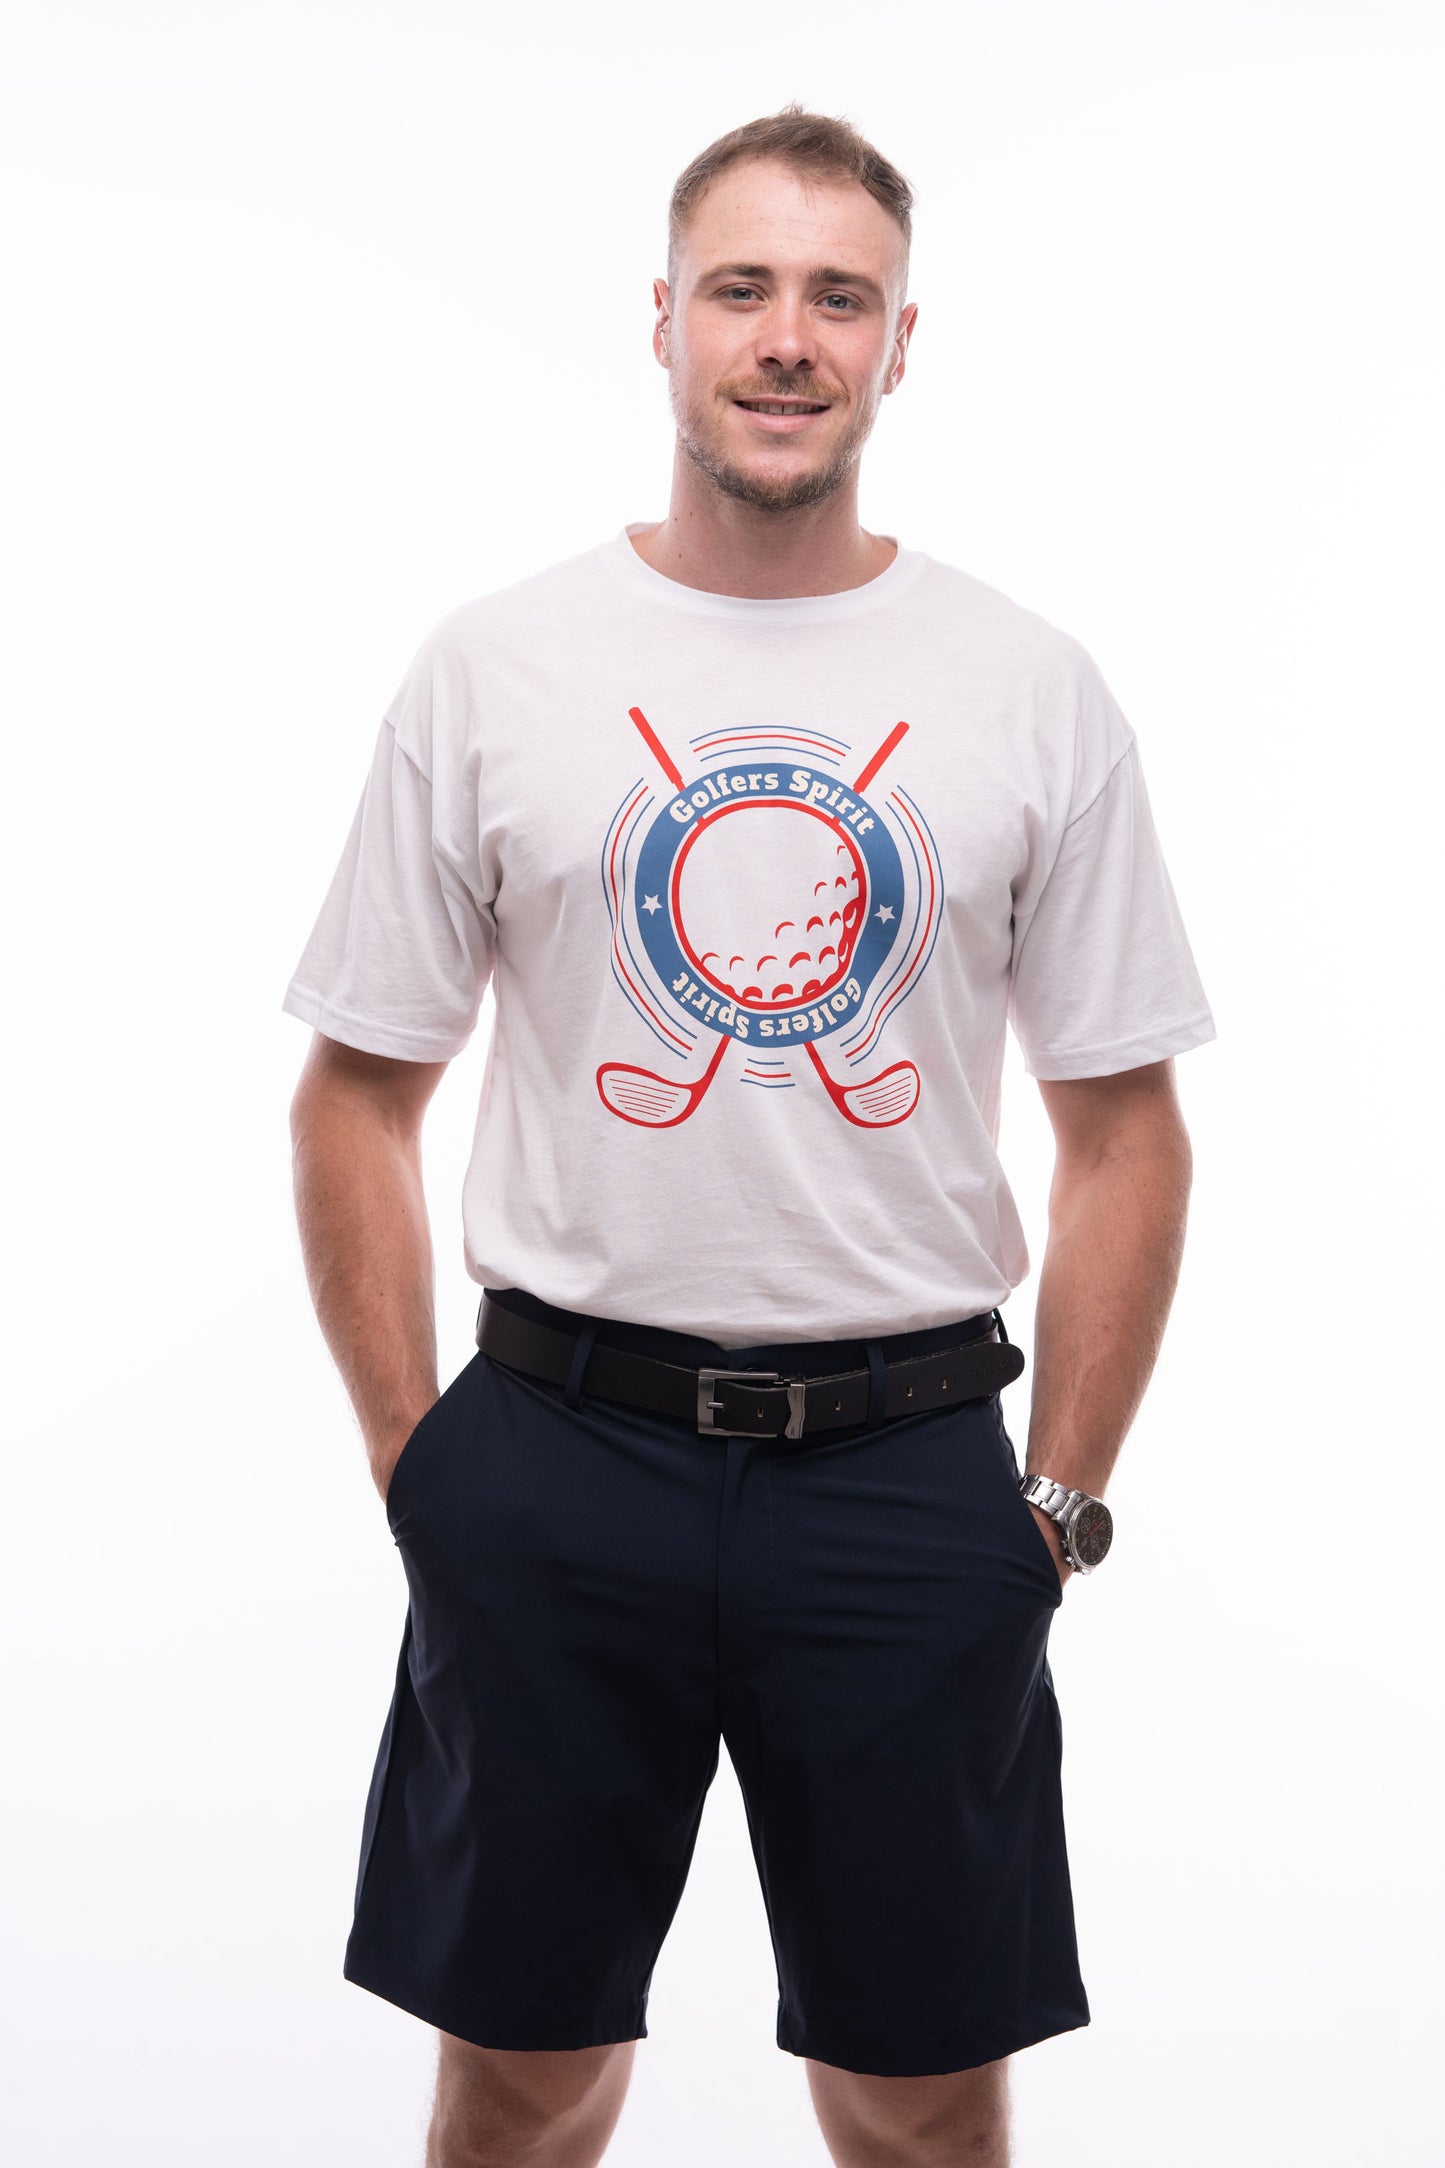 T-shirts  - Golfers Spirit